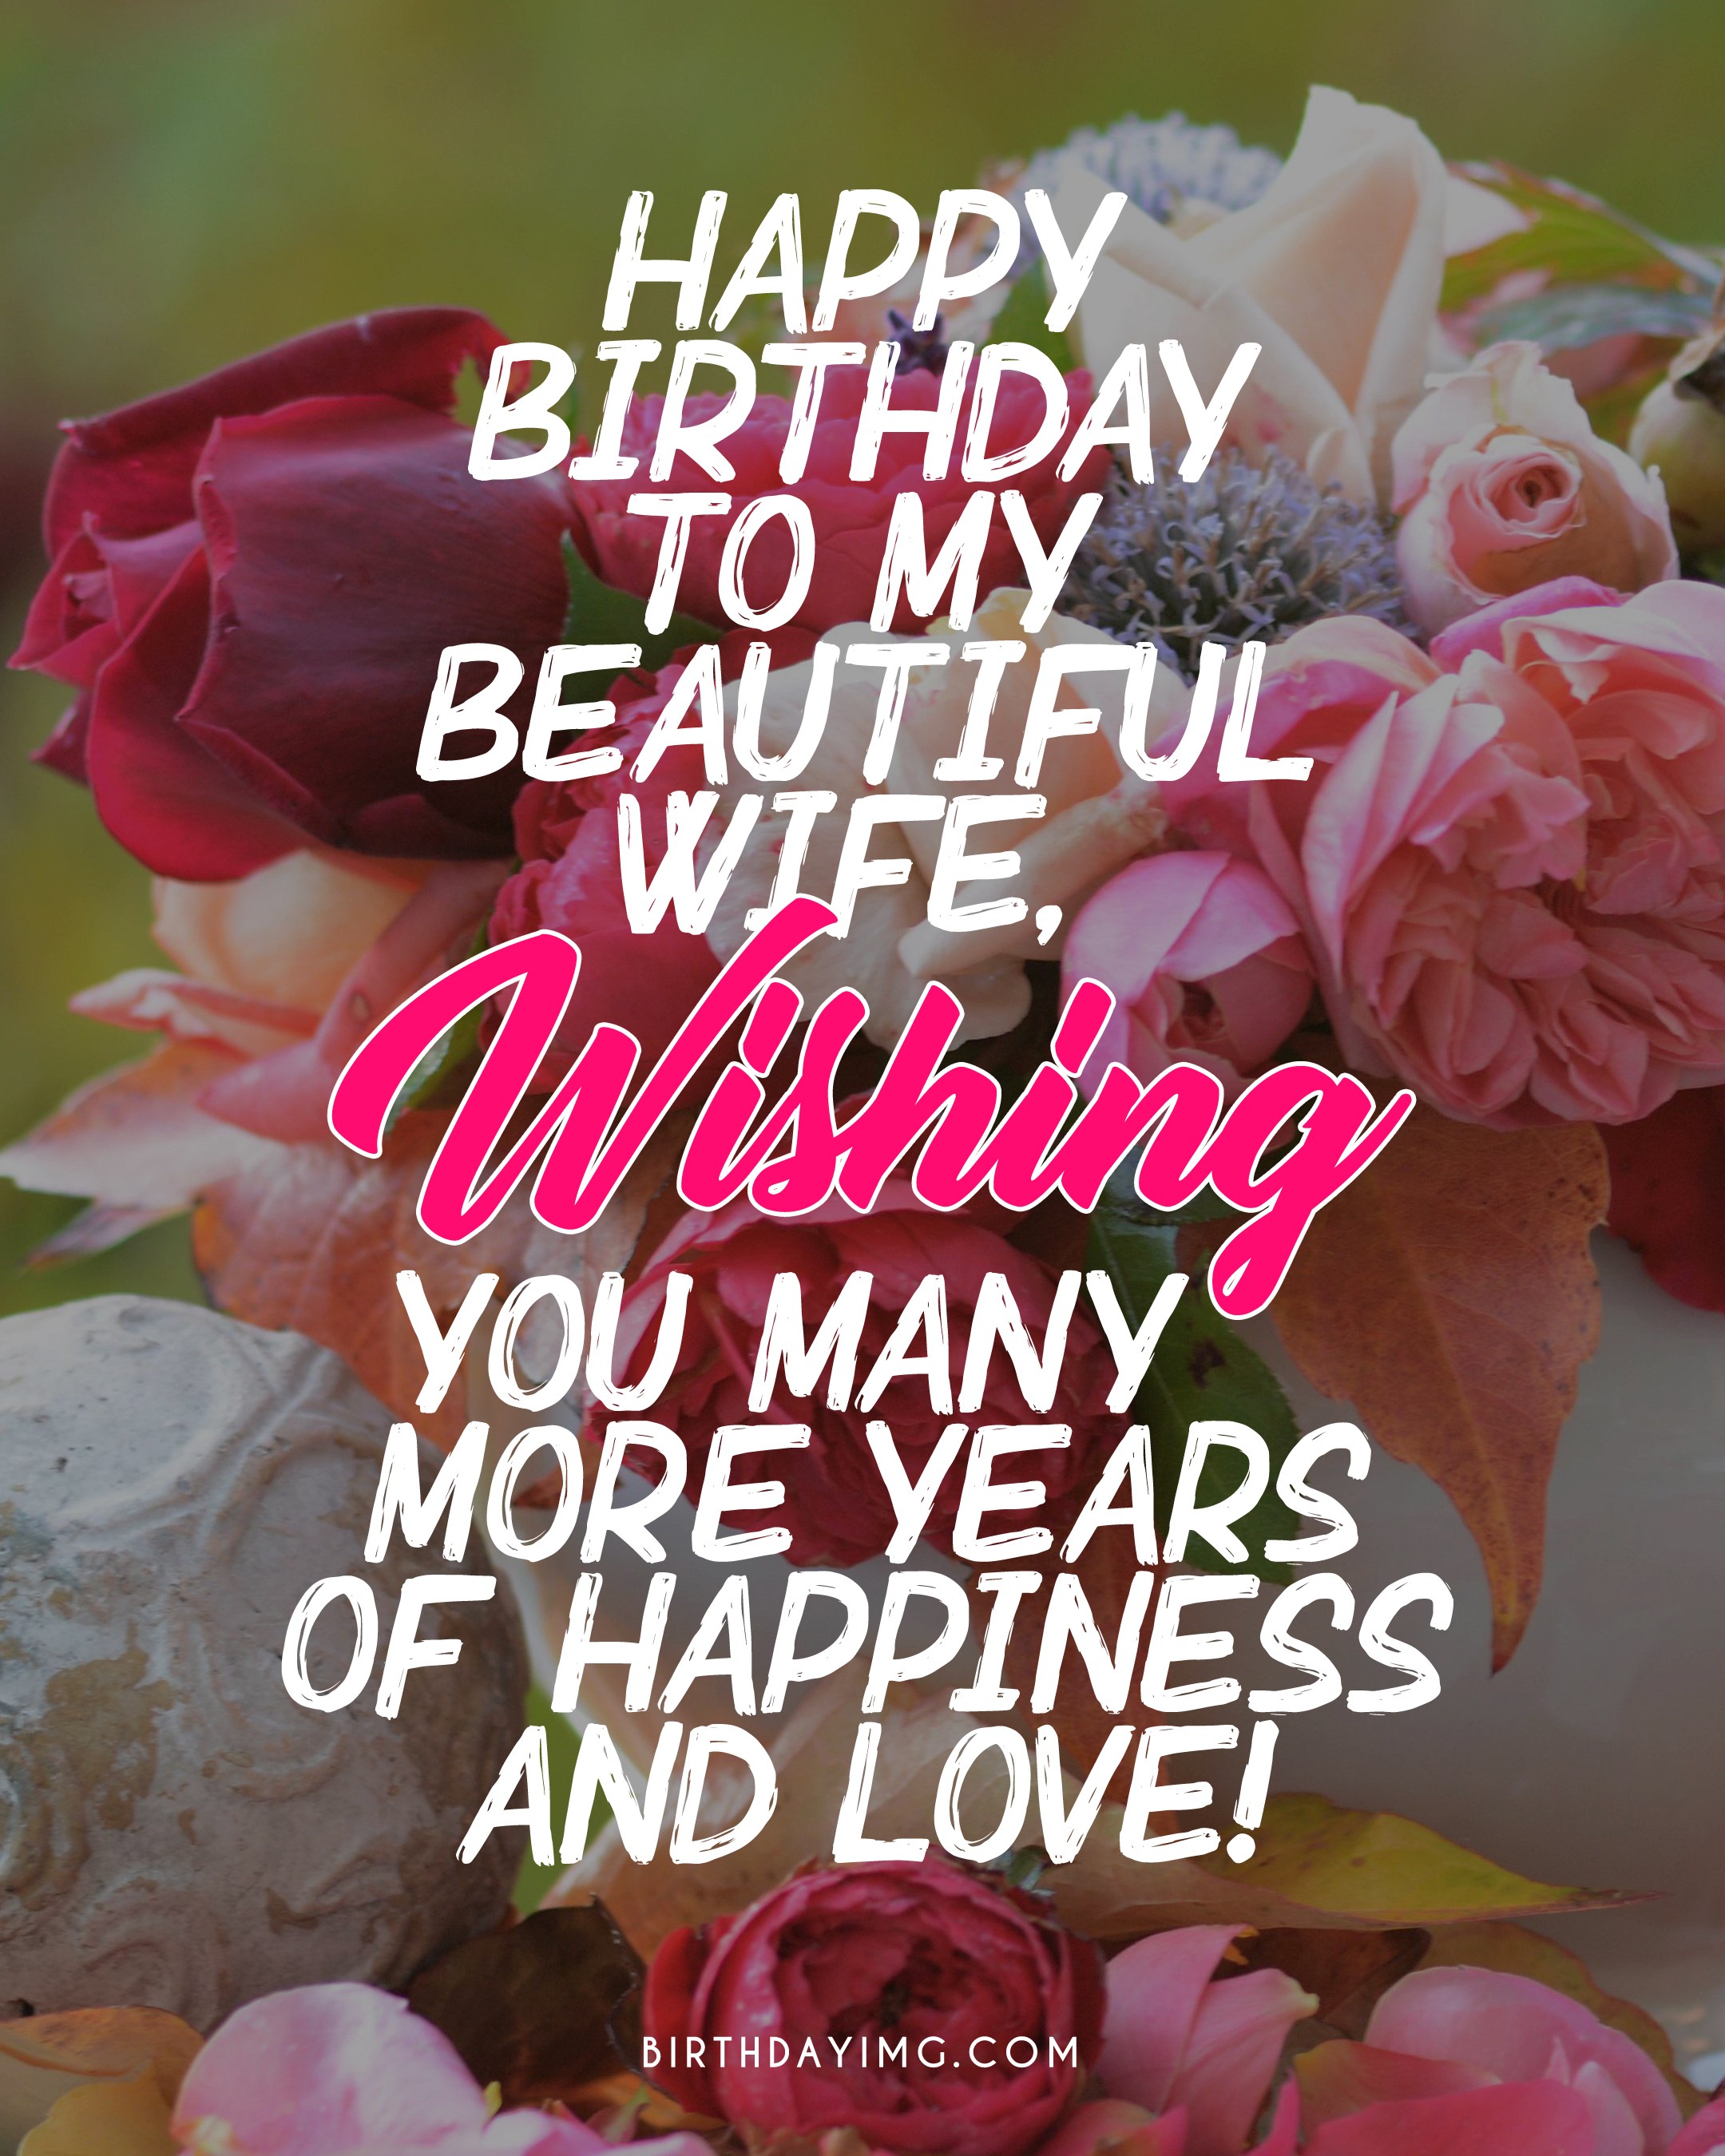 Free For Wife Happy Birthday Image - birthdayimg.com